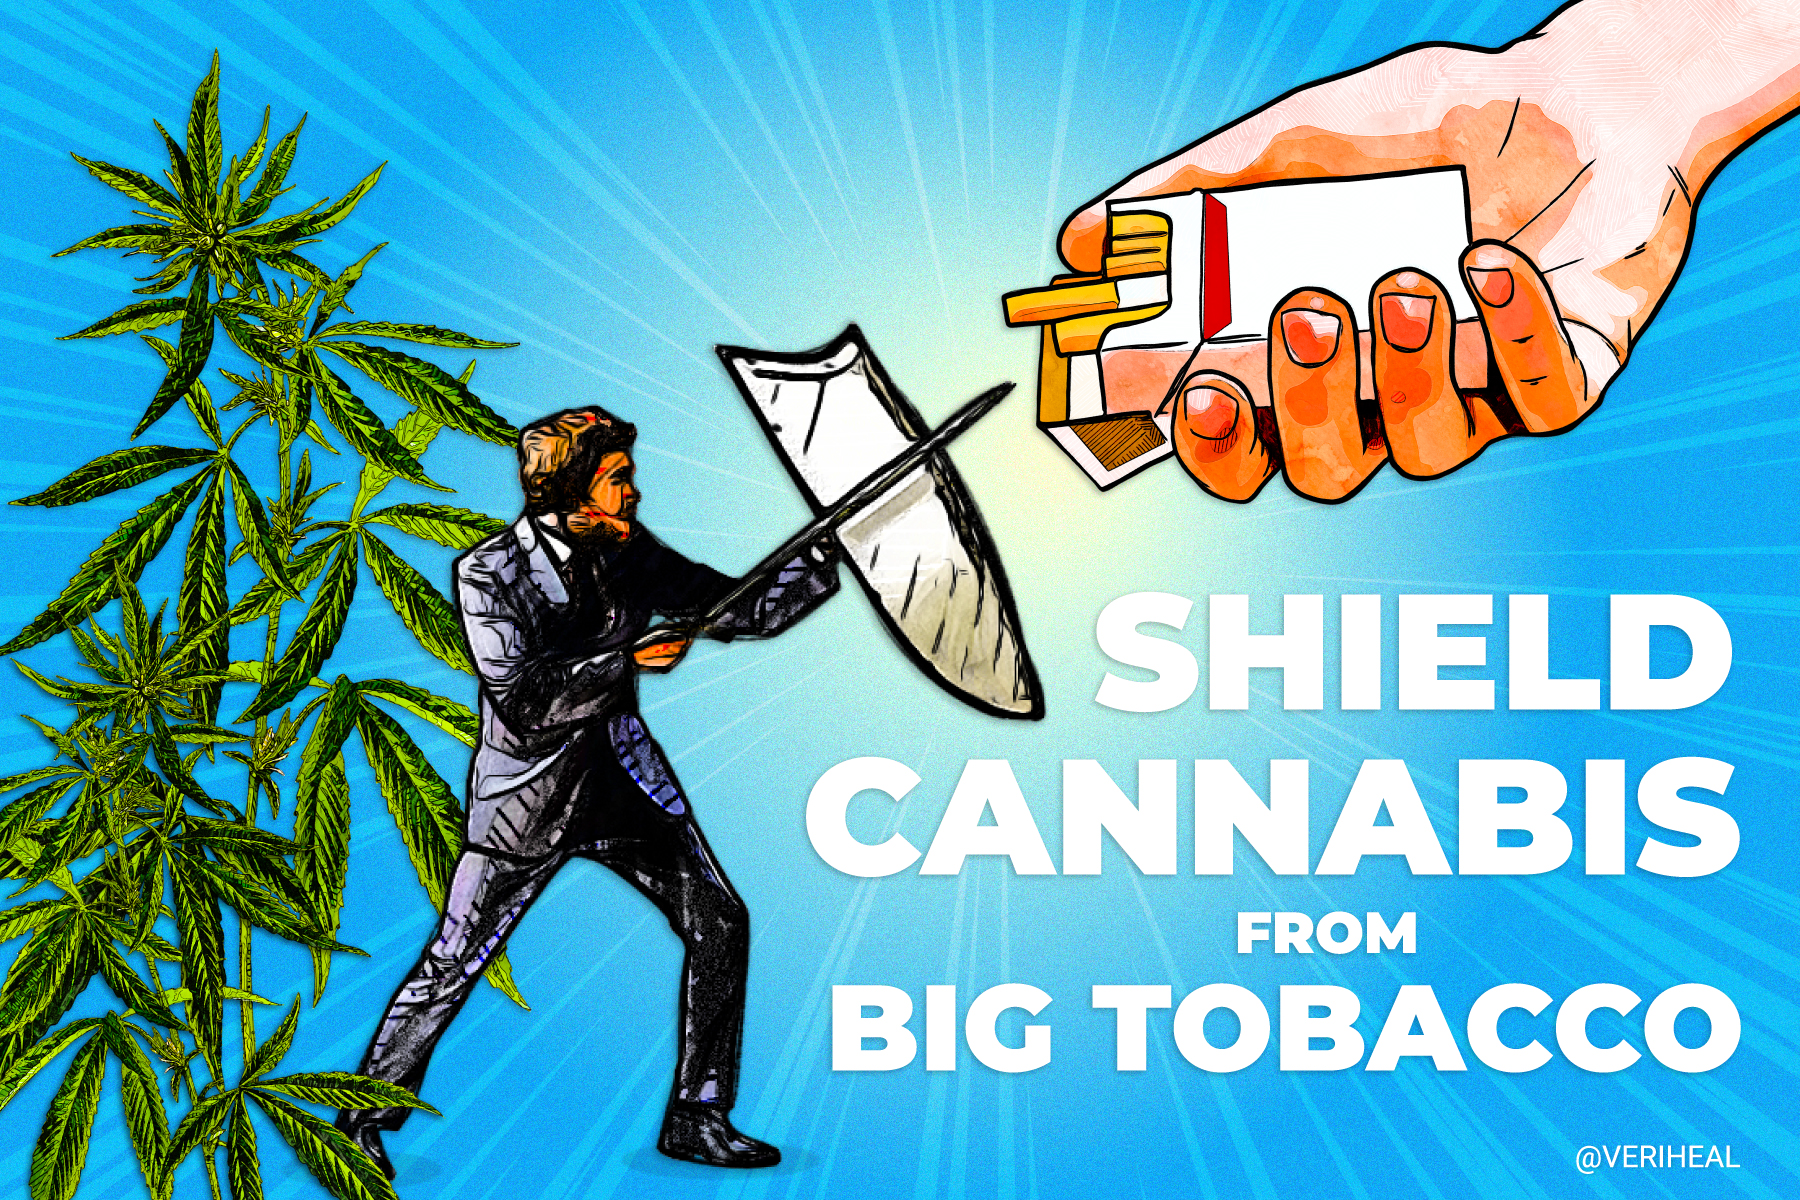 Colorado Attorney General Wants Congress To Shield Cannabis From Big Tobacco